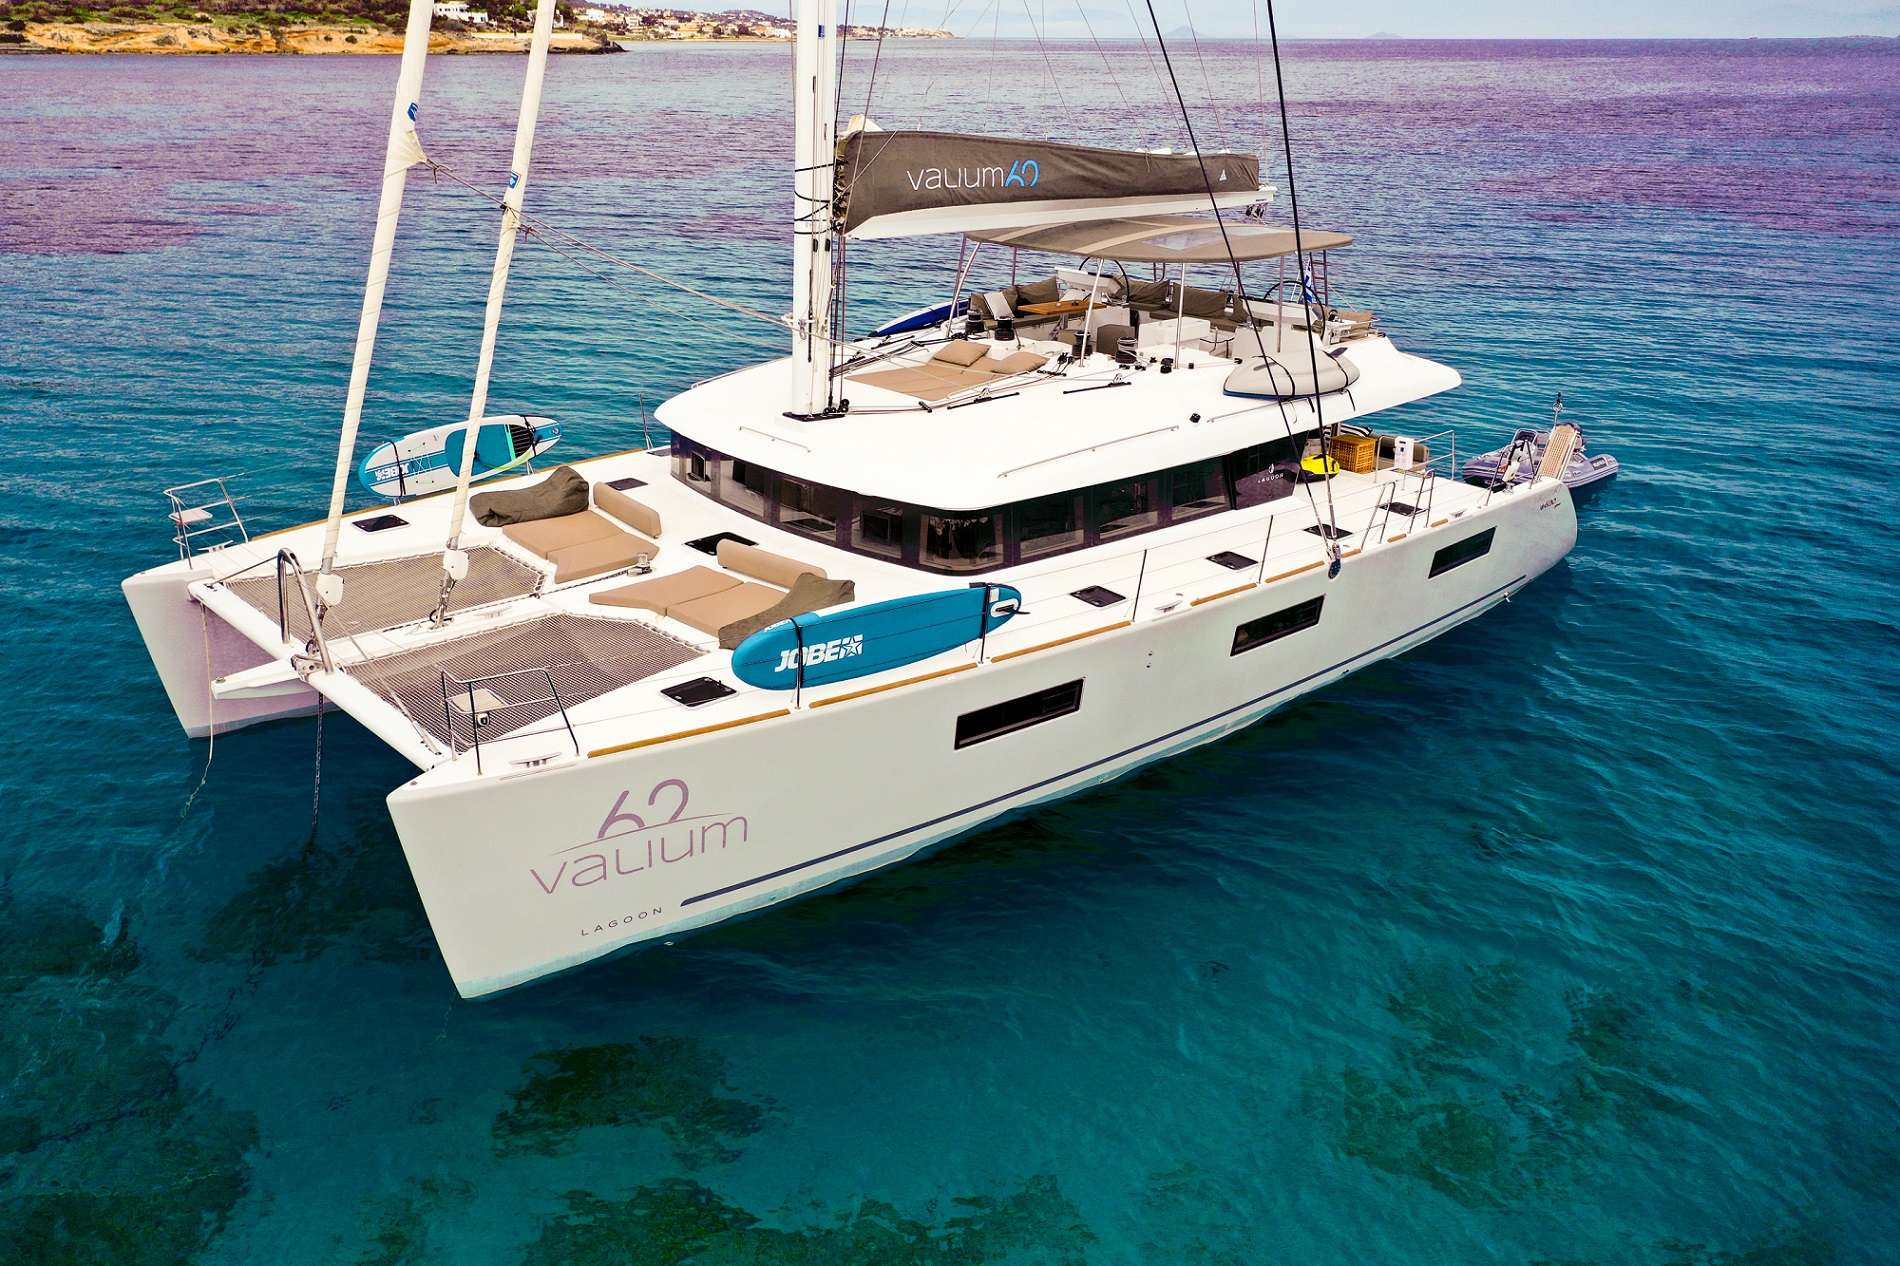 valium62 - Yacht Charter Achillio & Boat hire in Greece 2